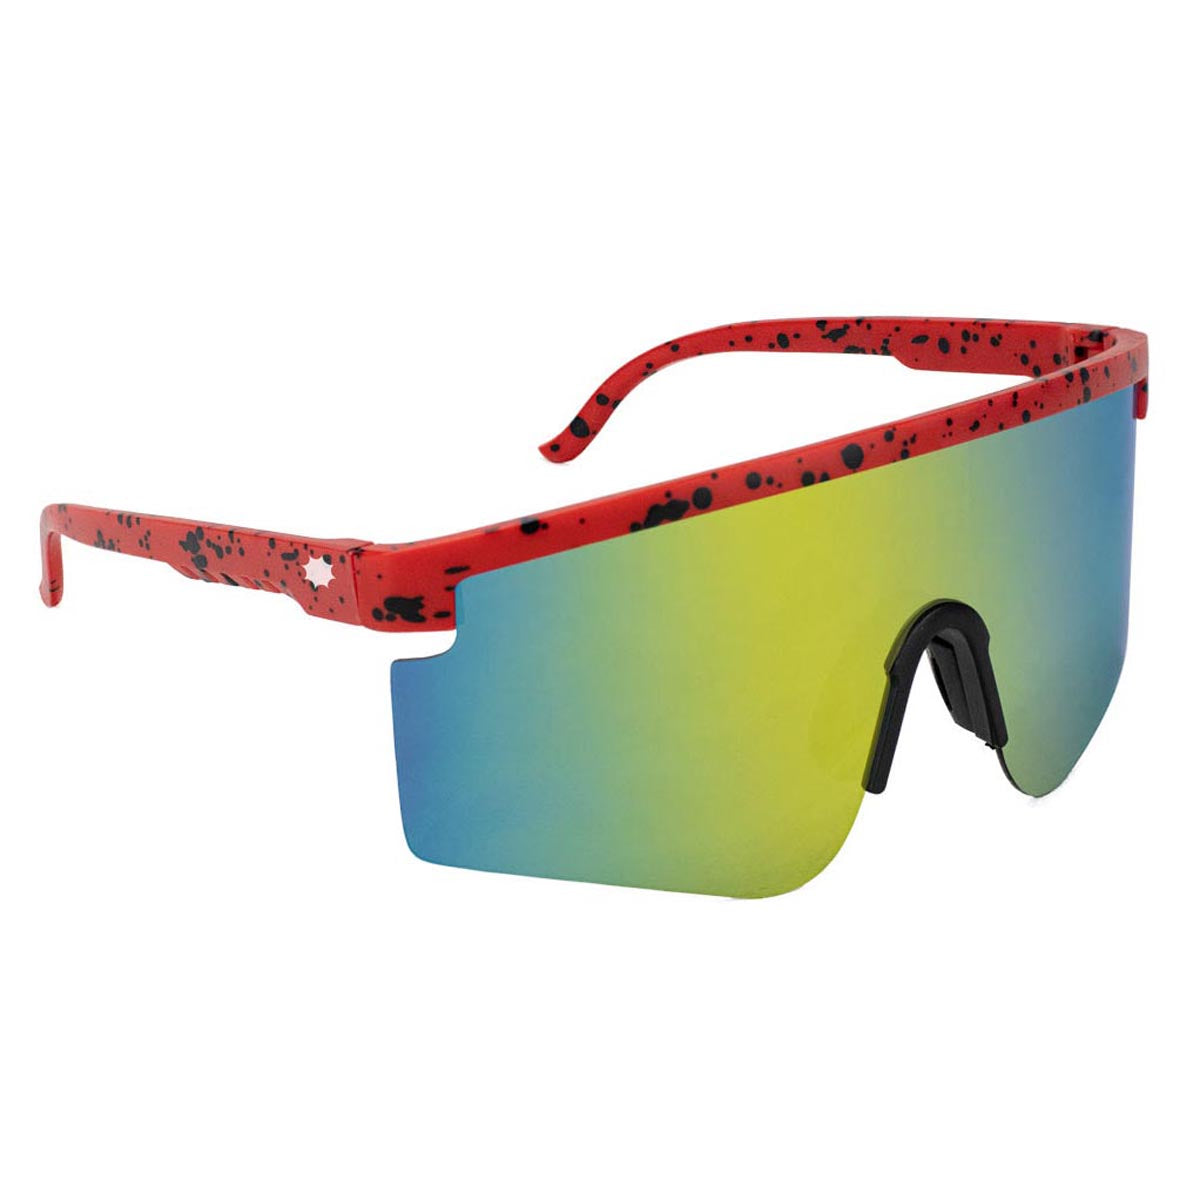 Glassy Mojave Polarized Sunglasses - Red/Yellow Mirror image 1